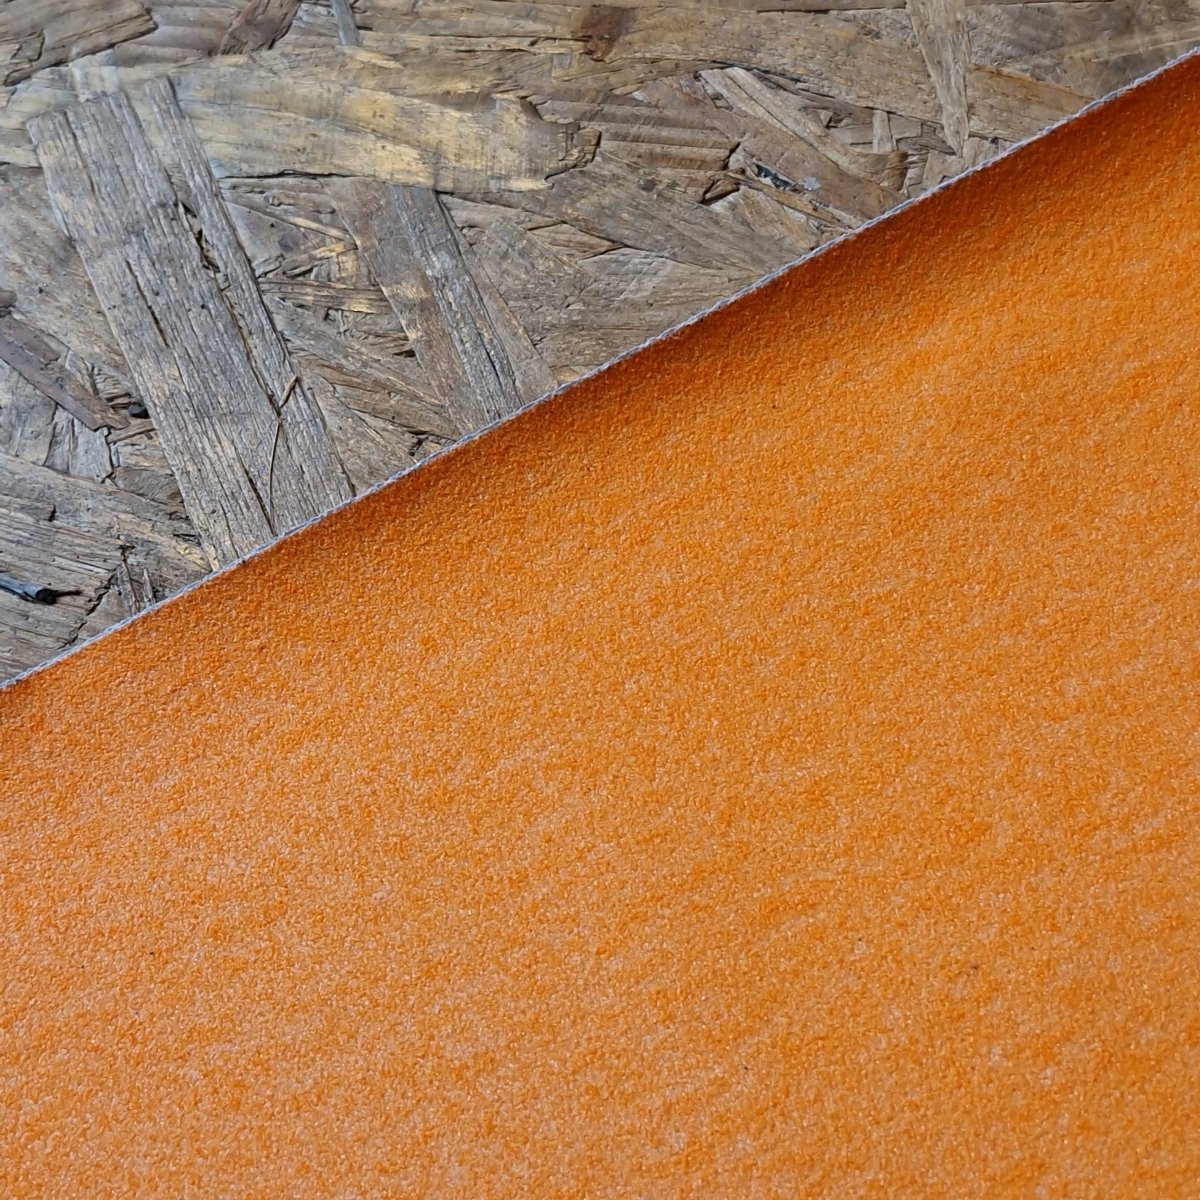 Pivot Perforated Griptape neon orange - Skateboard-Kleinteile - Rollbrett Mission